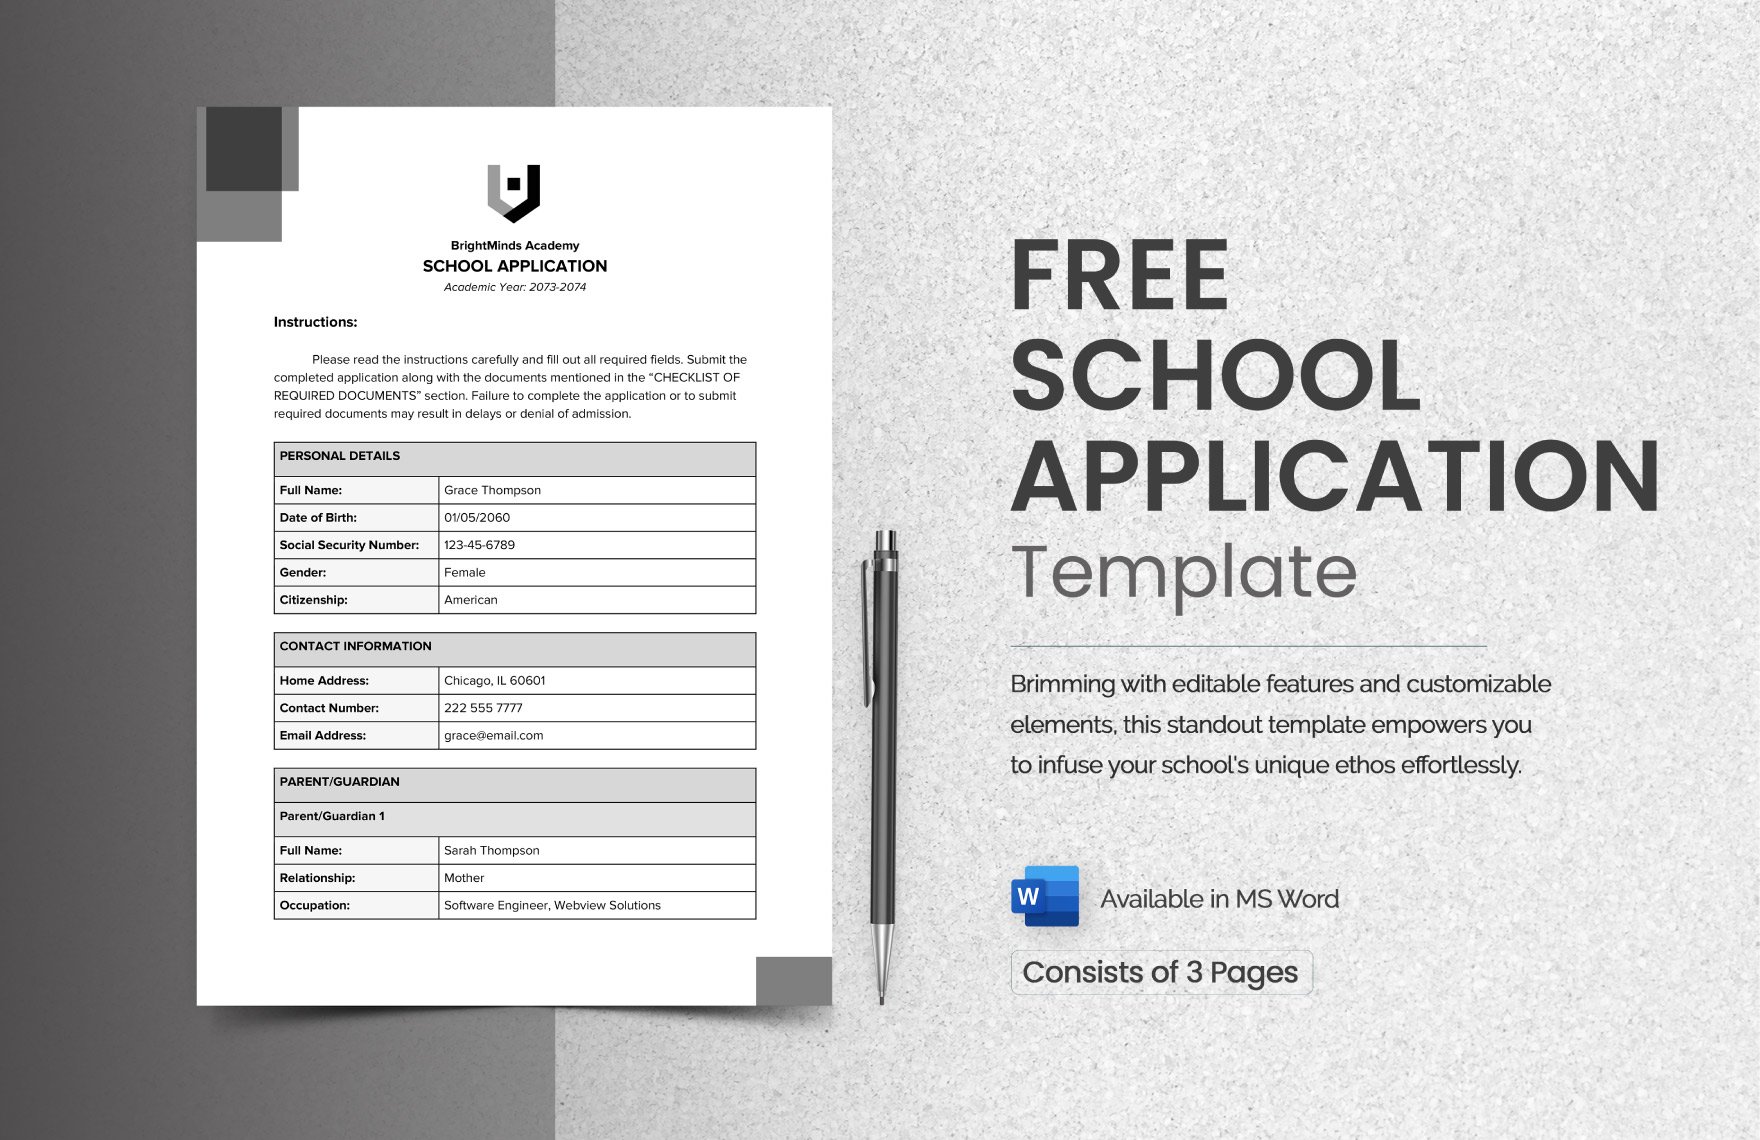 Free School Application Template in Word